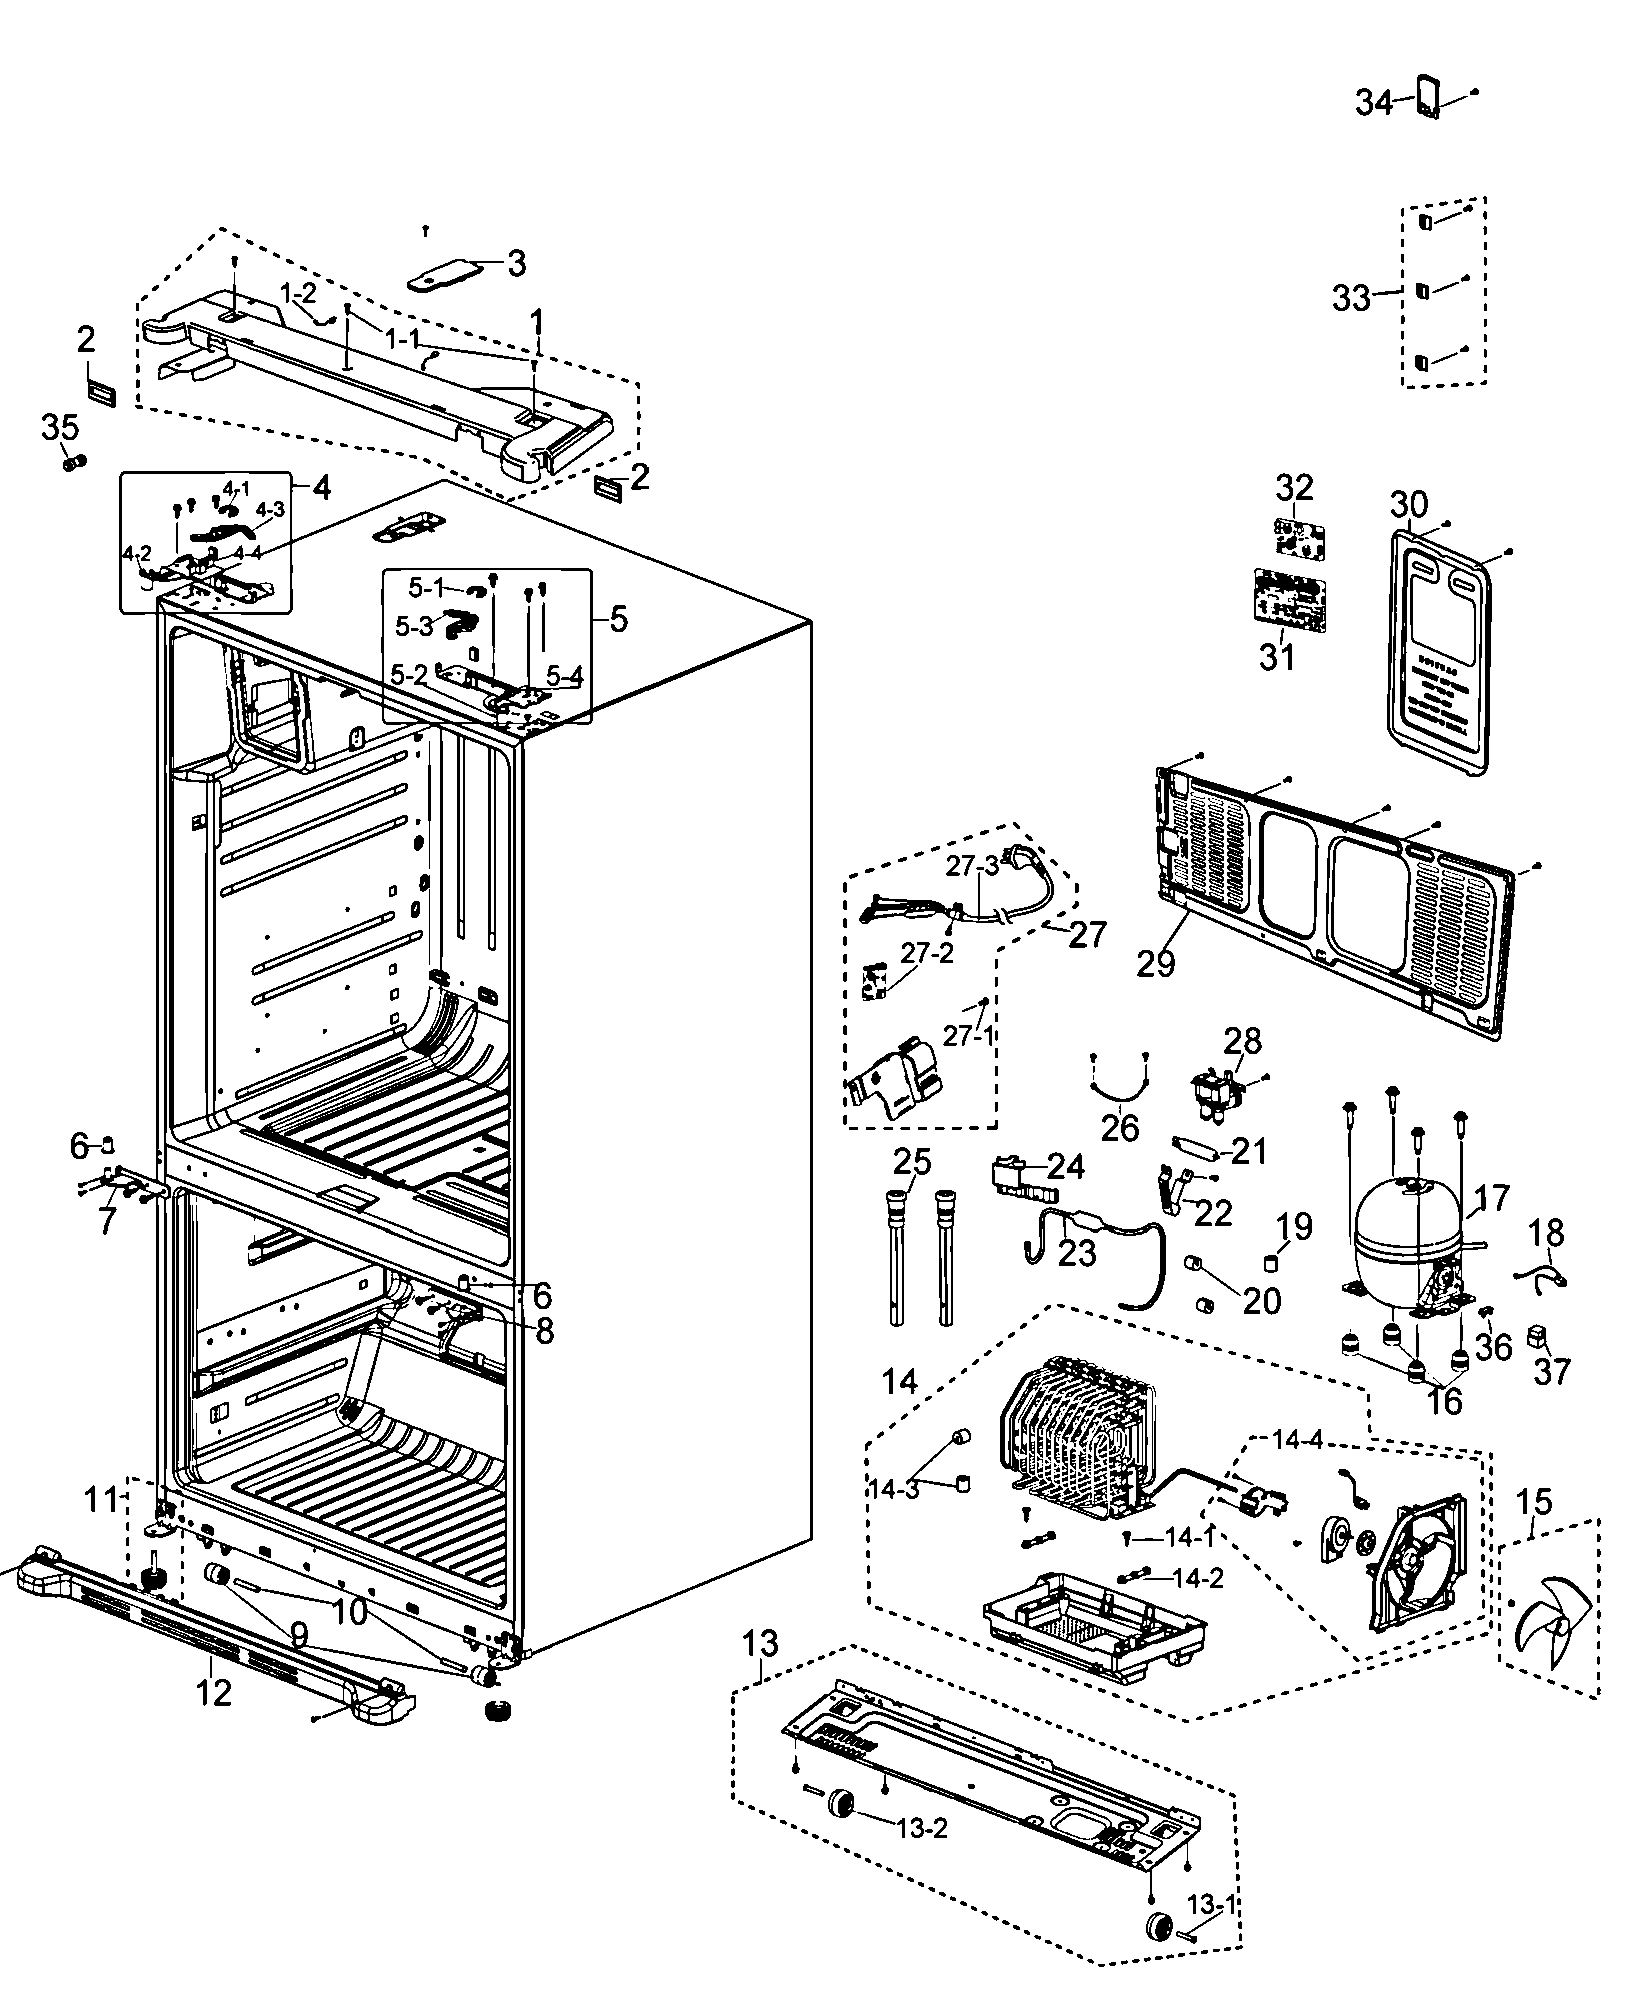 [DIAGRAM] Wiring Diagram Samsung Refrigerator - MYDIAGRAM.ONLINE